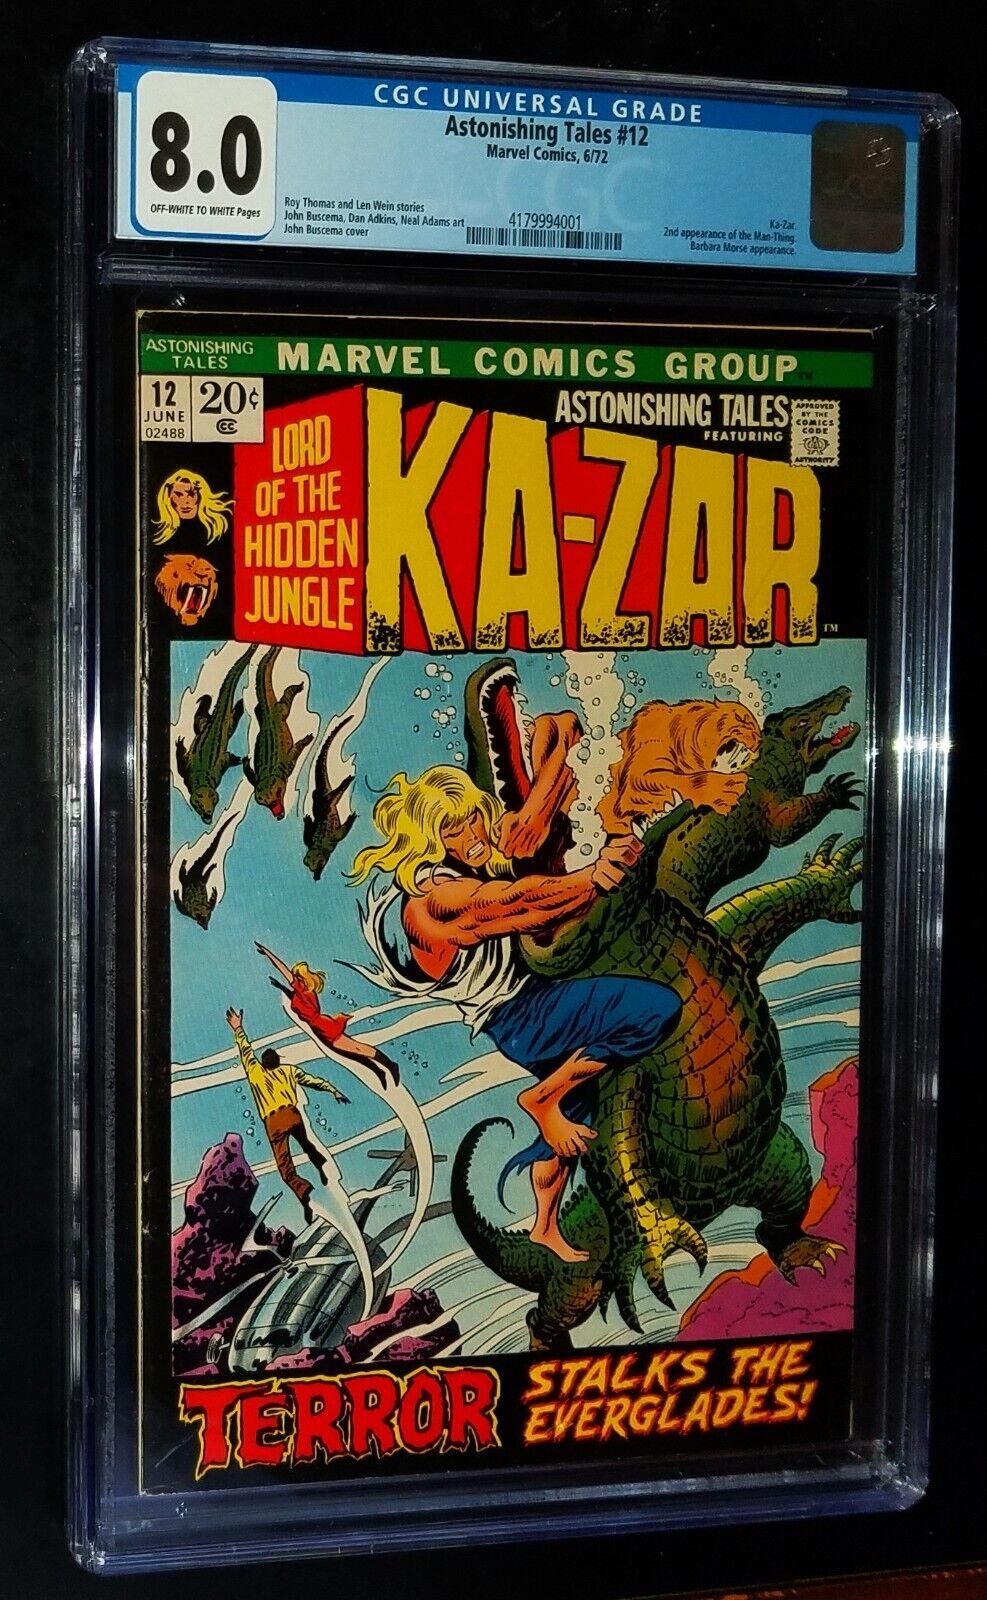 CGC ASTONISHING TALES KA-ZAR #12 1972 Marvel Comics CGC 8.0 Very Fine